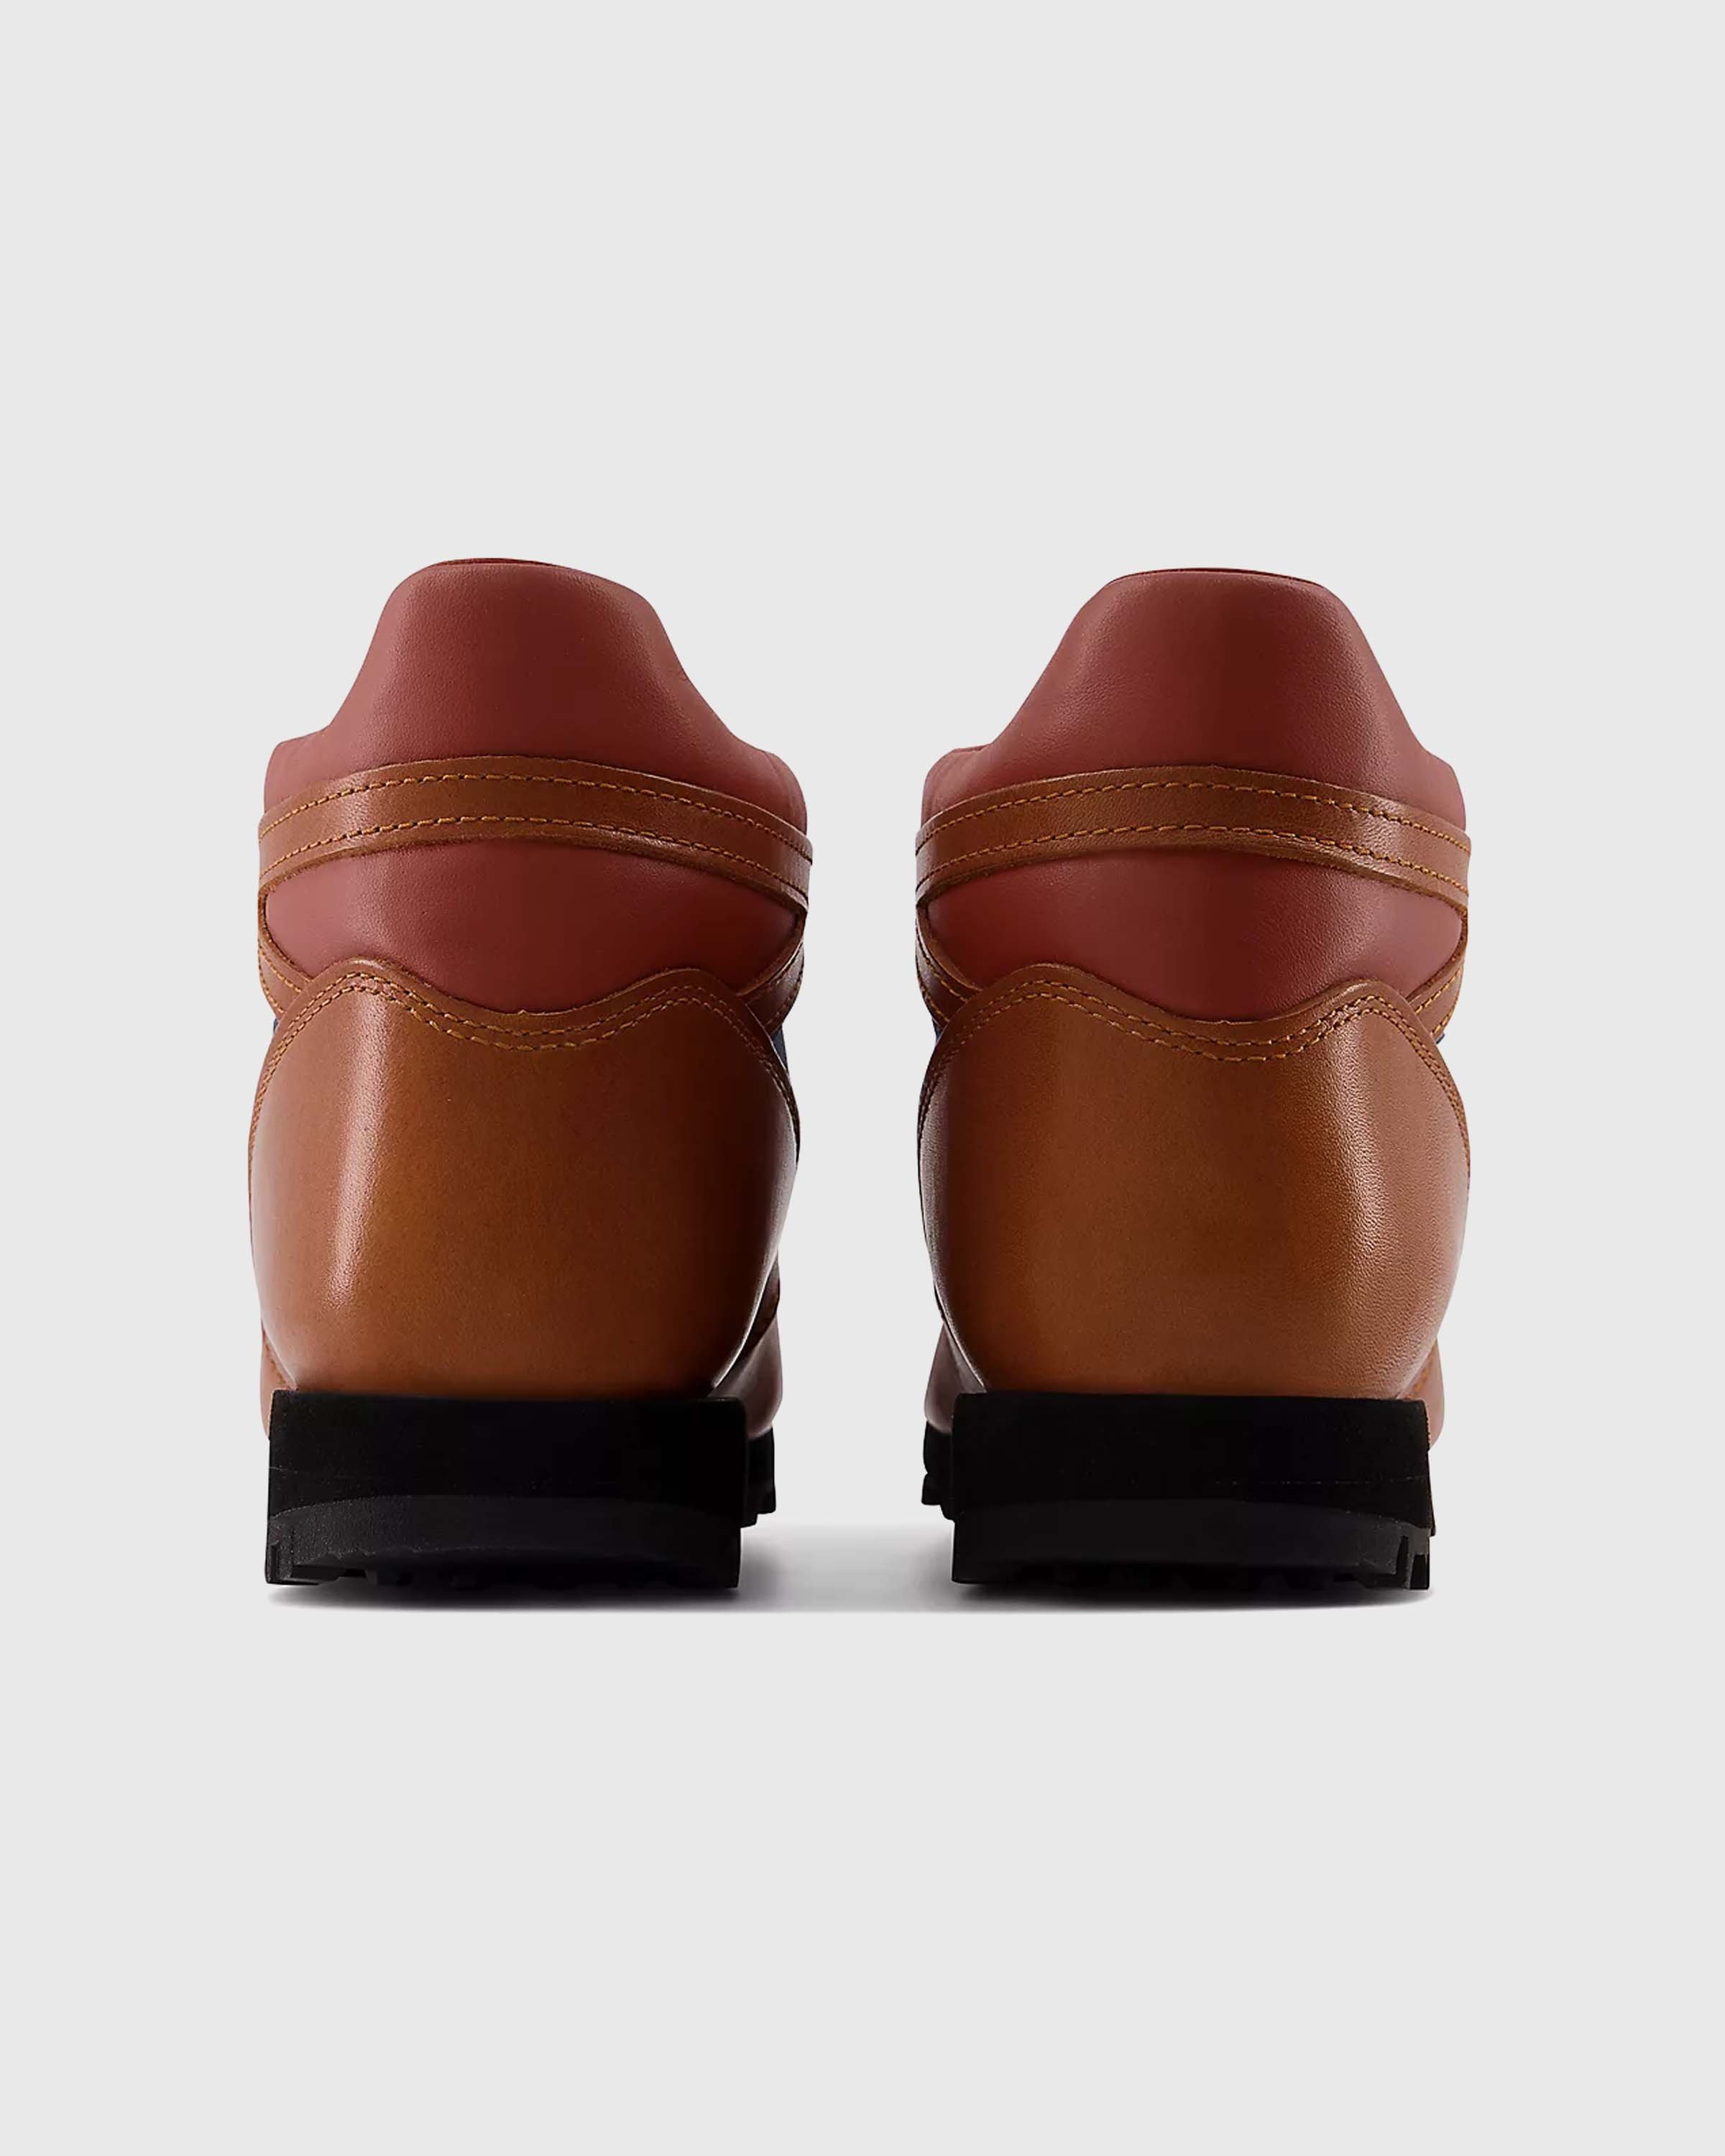 New Balance - URAINOG Brown - Footwear - Brown - Image 4